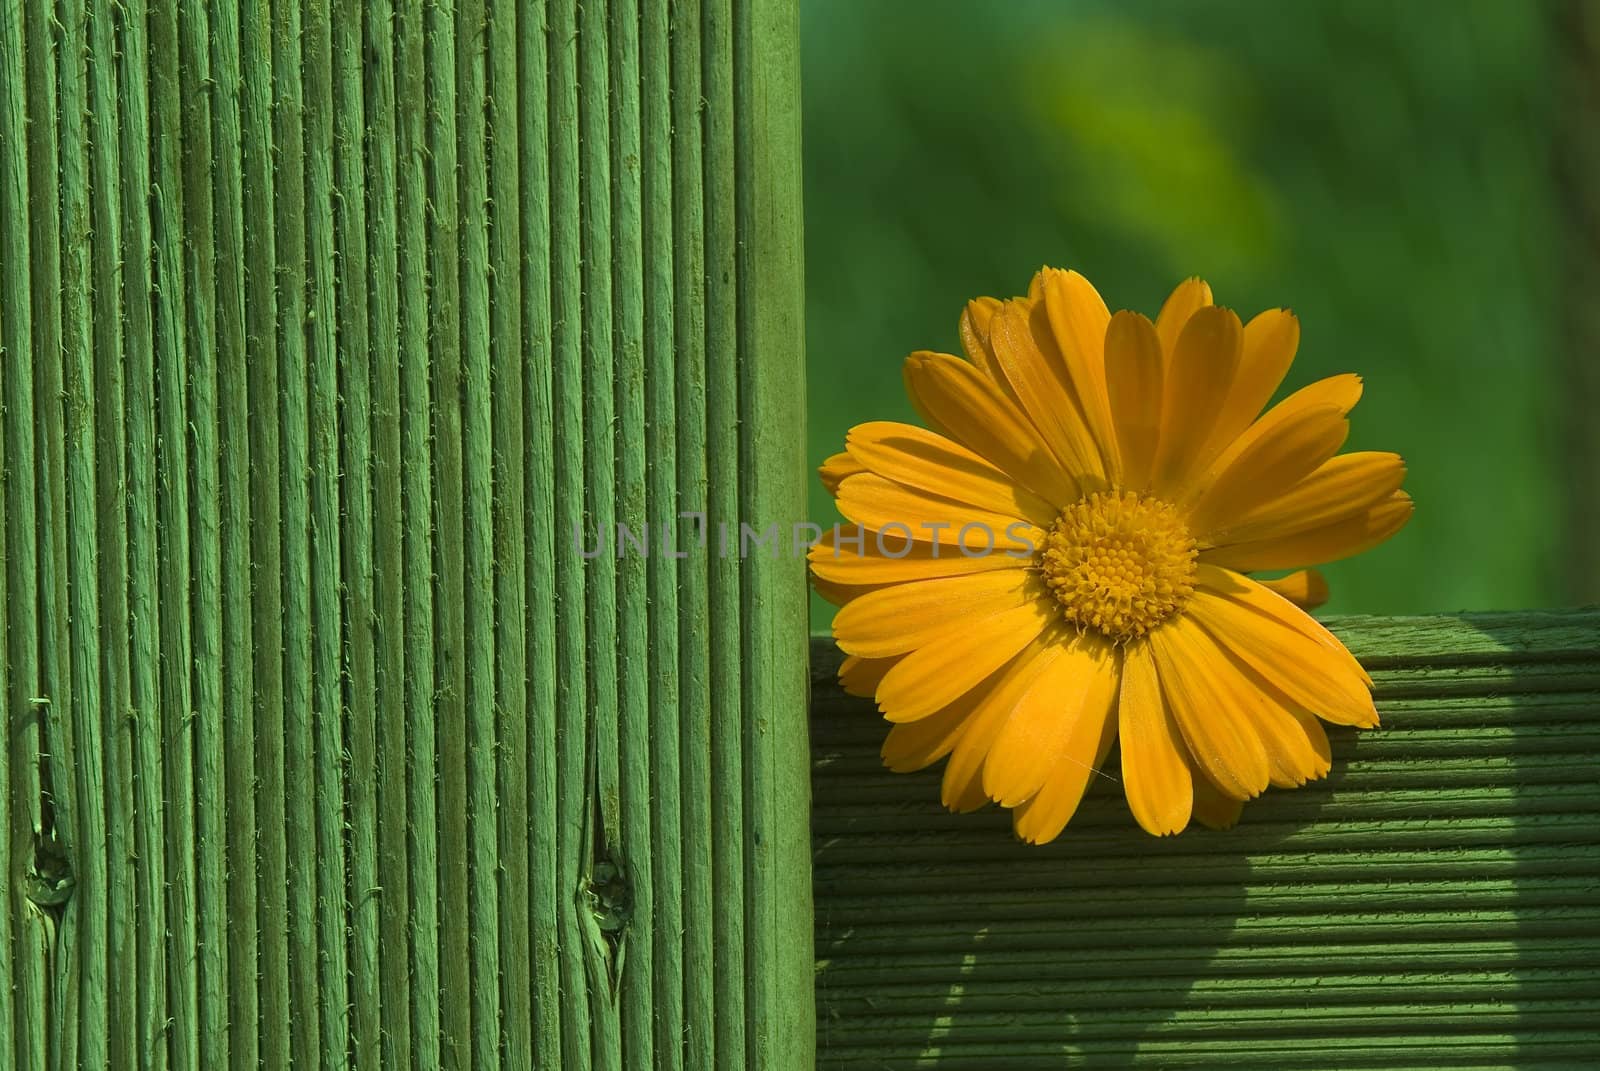 orange daisy wooden fence 